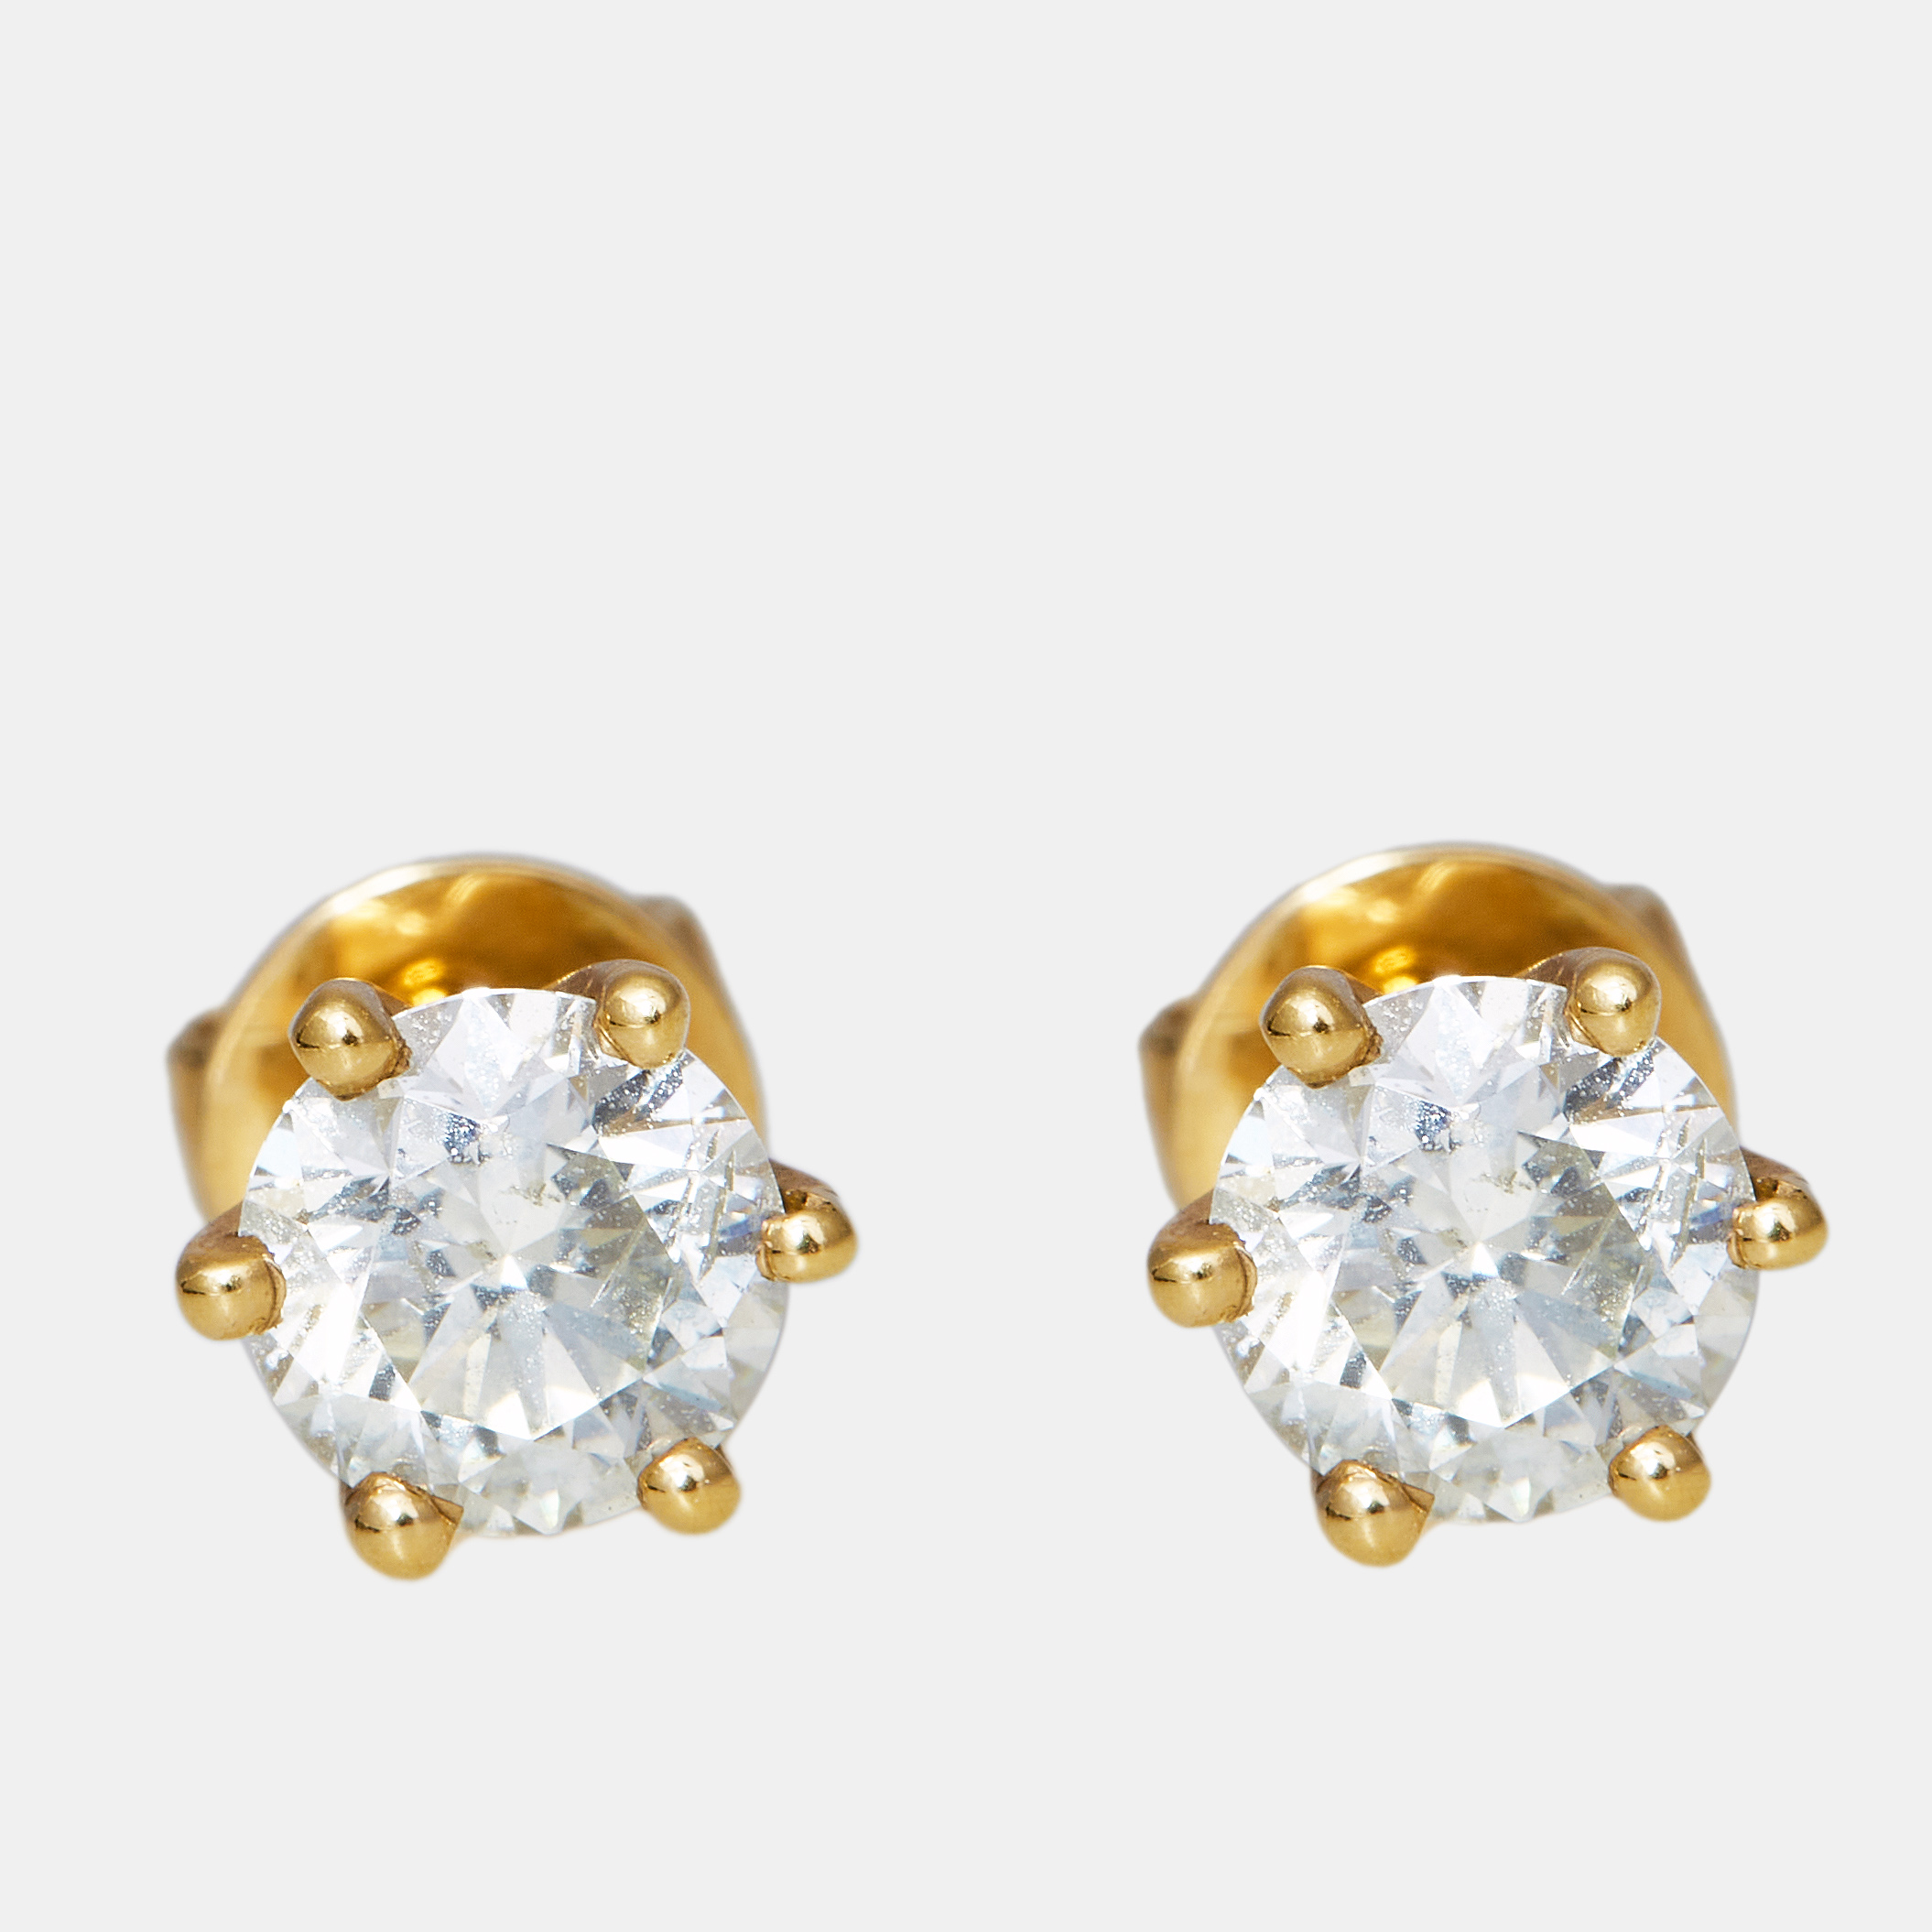 The diamond edit 18k yellow gold 0.98 ct diamond earrings